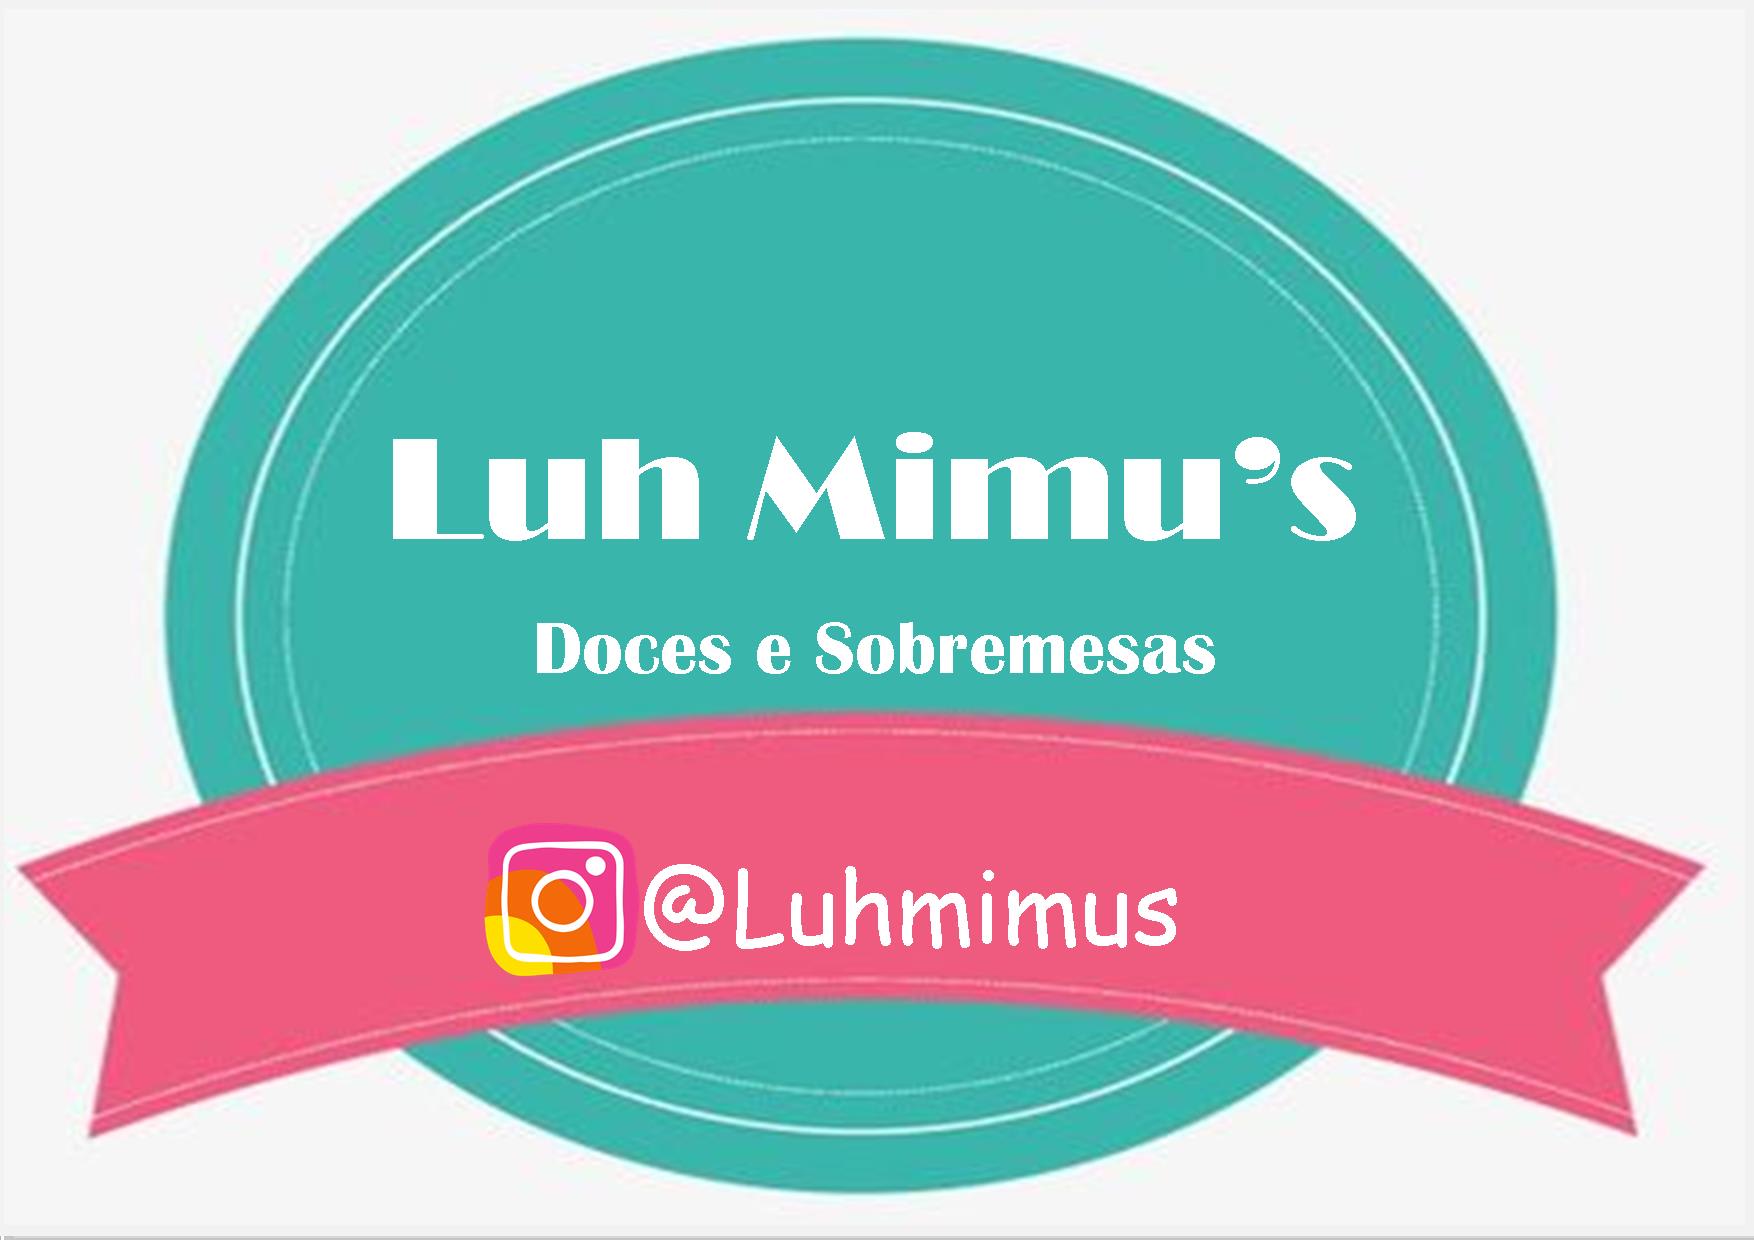 Luh Mimu's